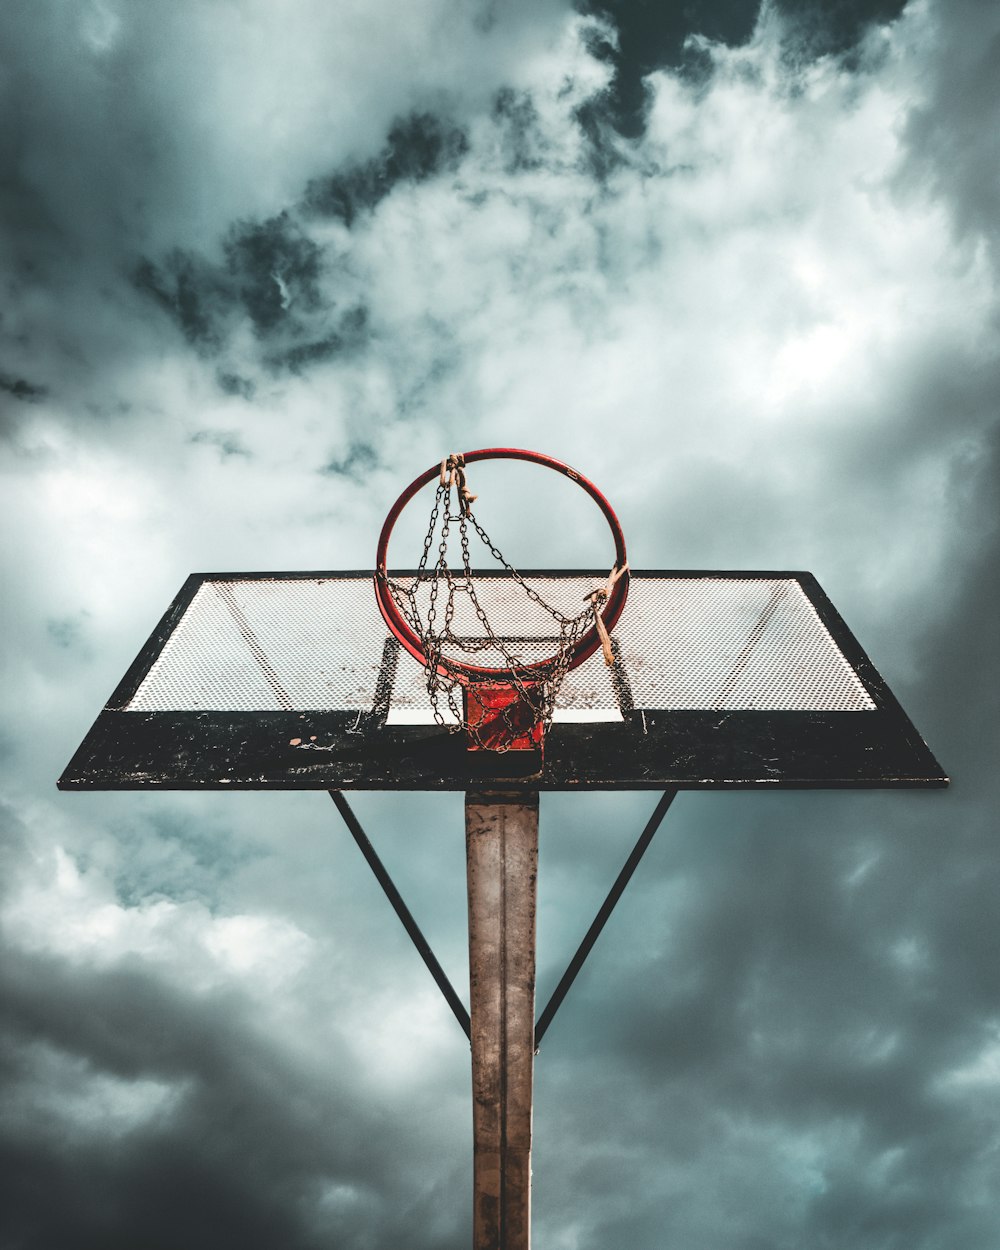 Spalding basketball in court photo – Free Basketball Image on Unsplash